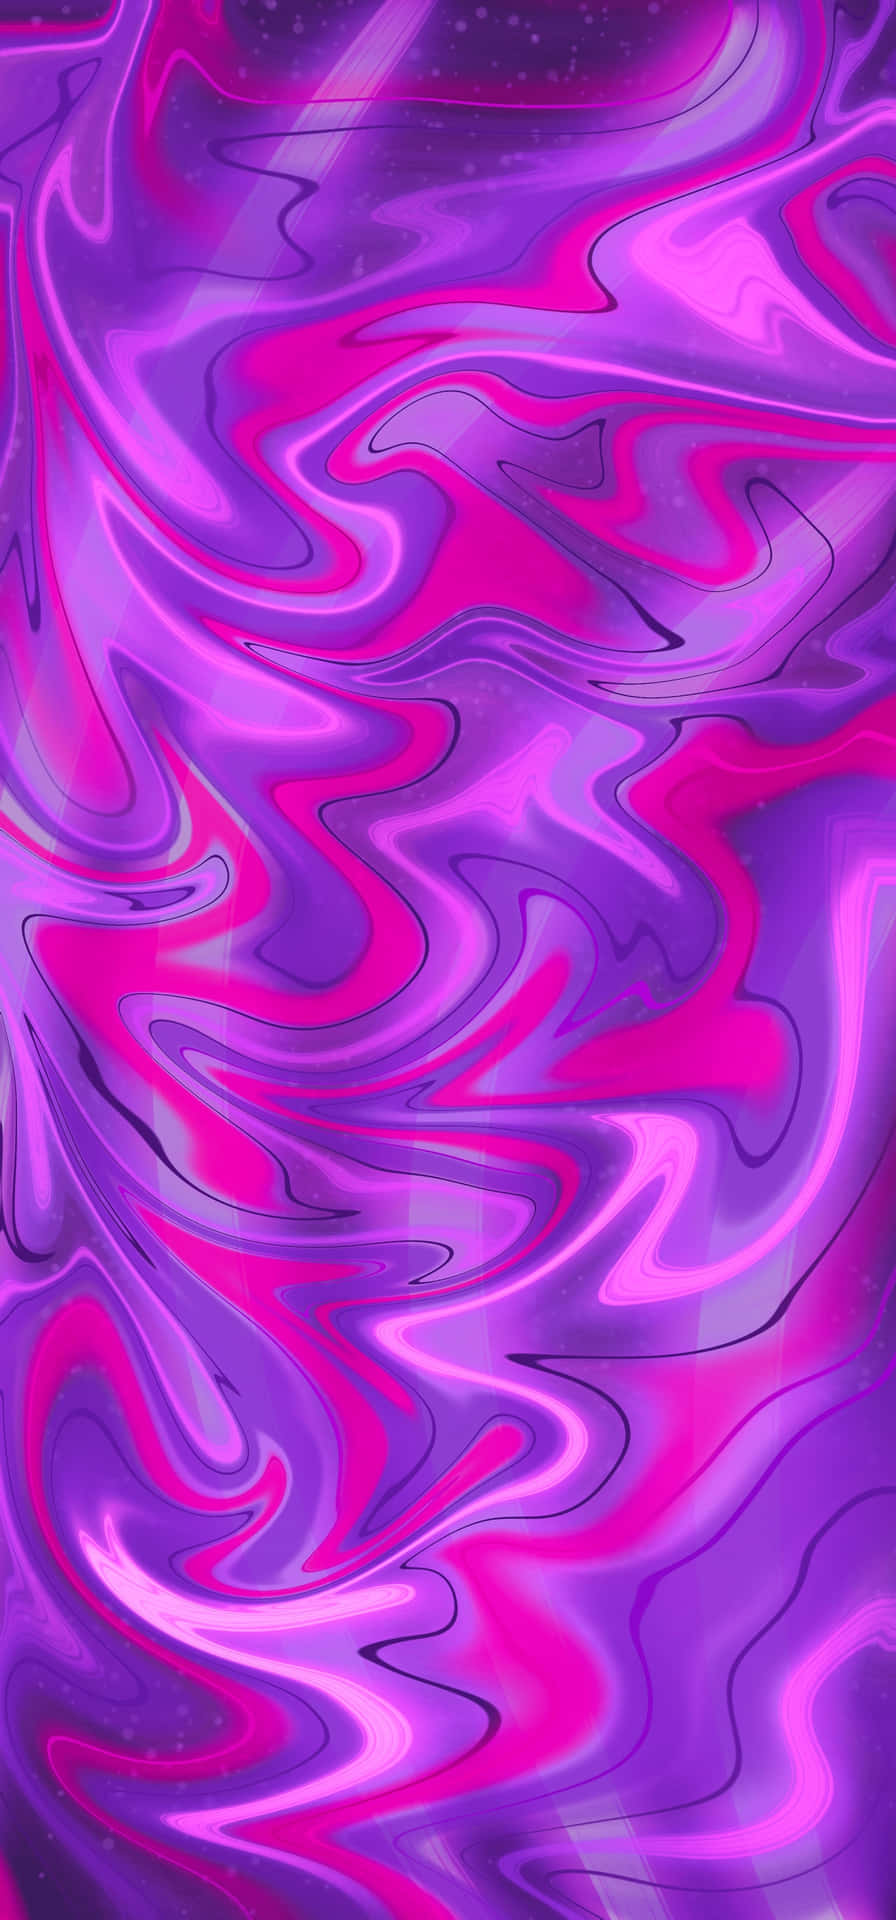 Trippy Purple Liquid Swirls Aesthetic.jpg Wallpaper